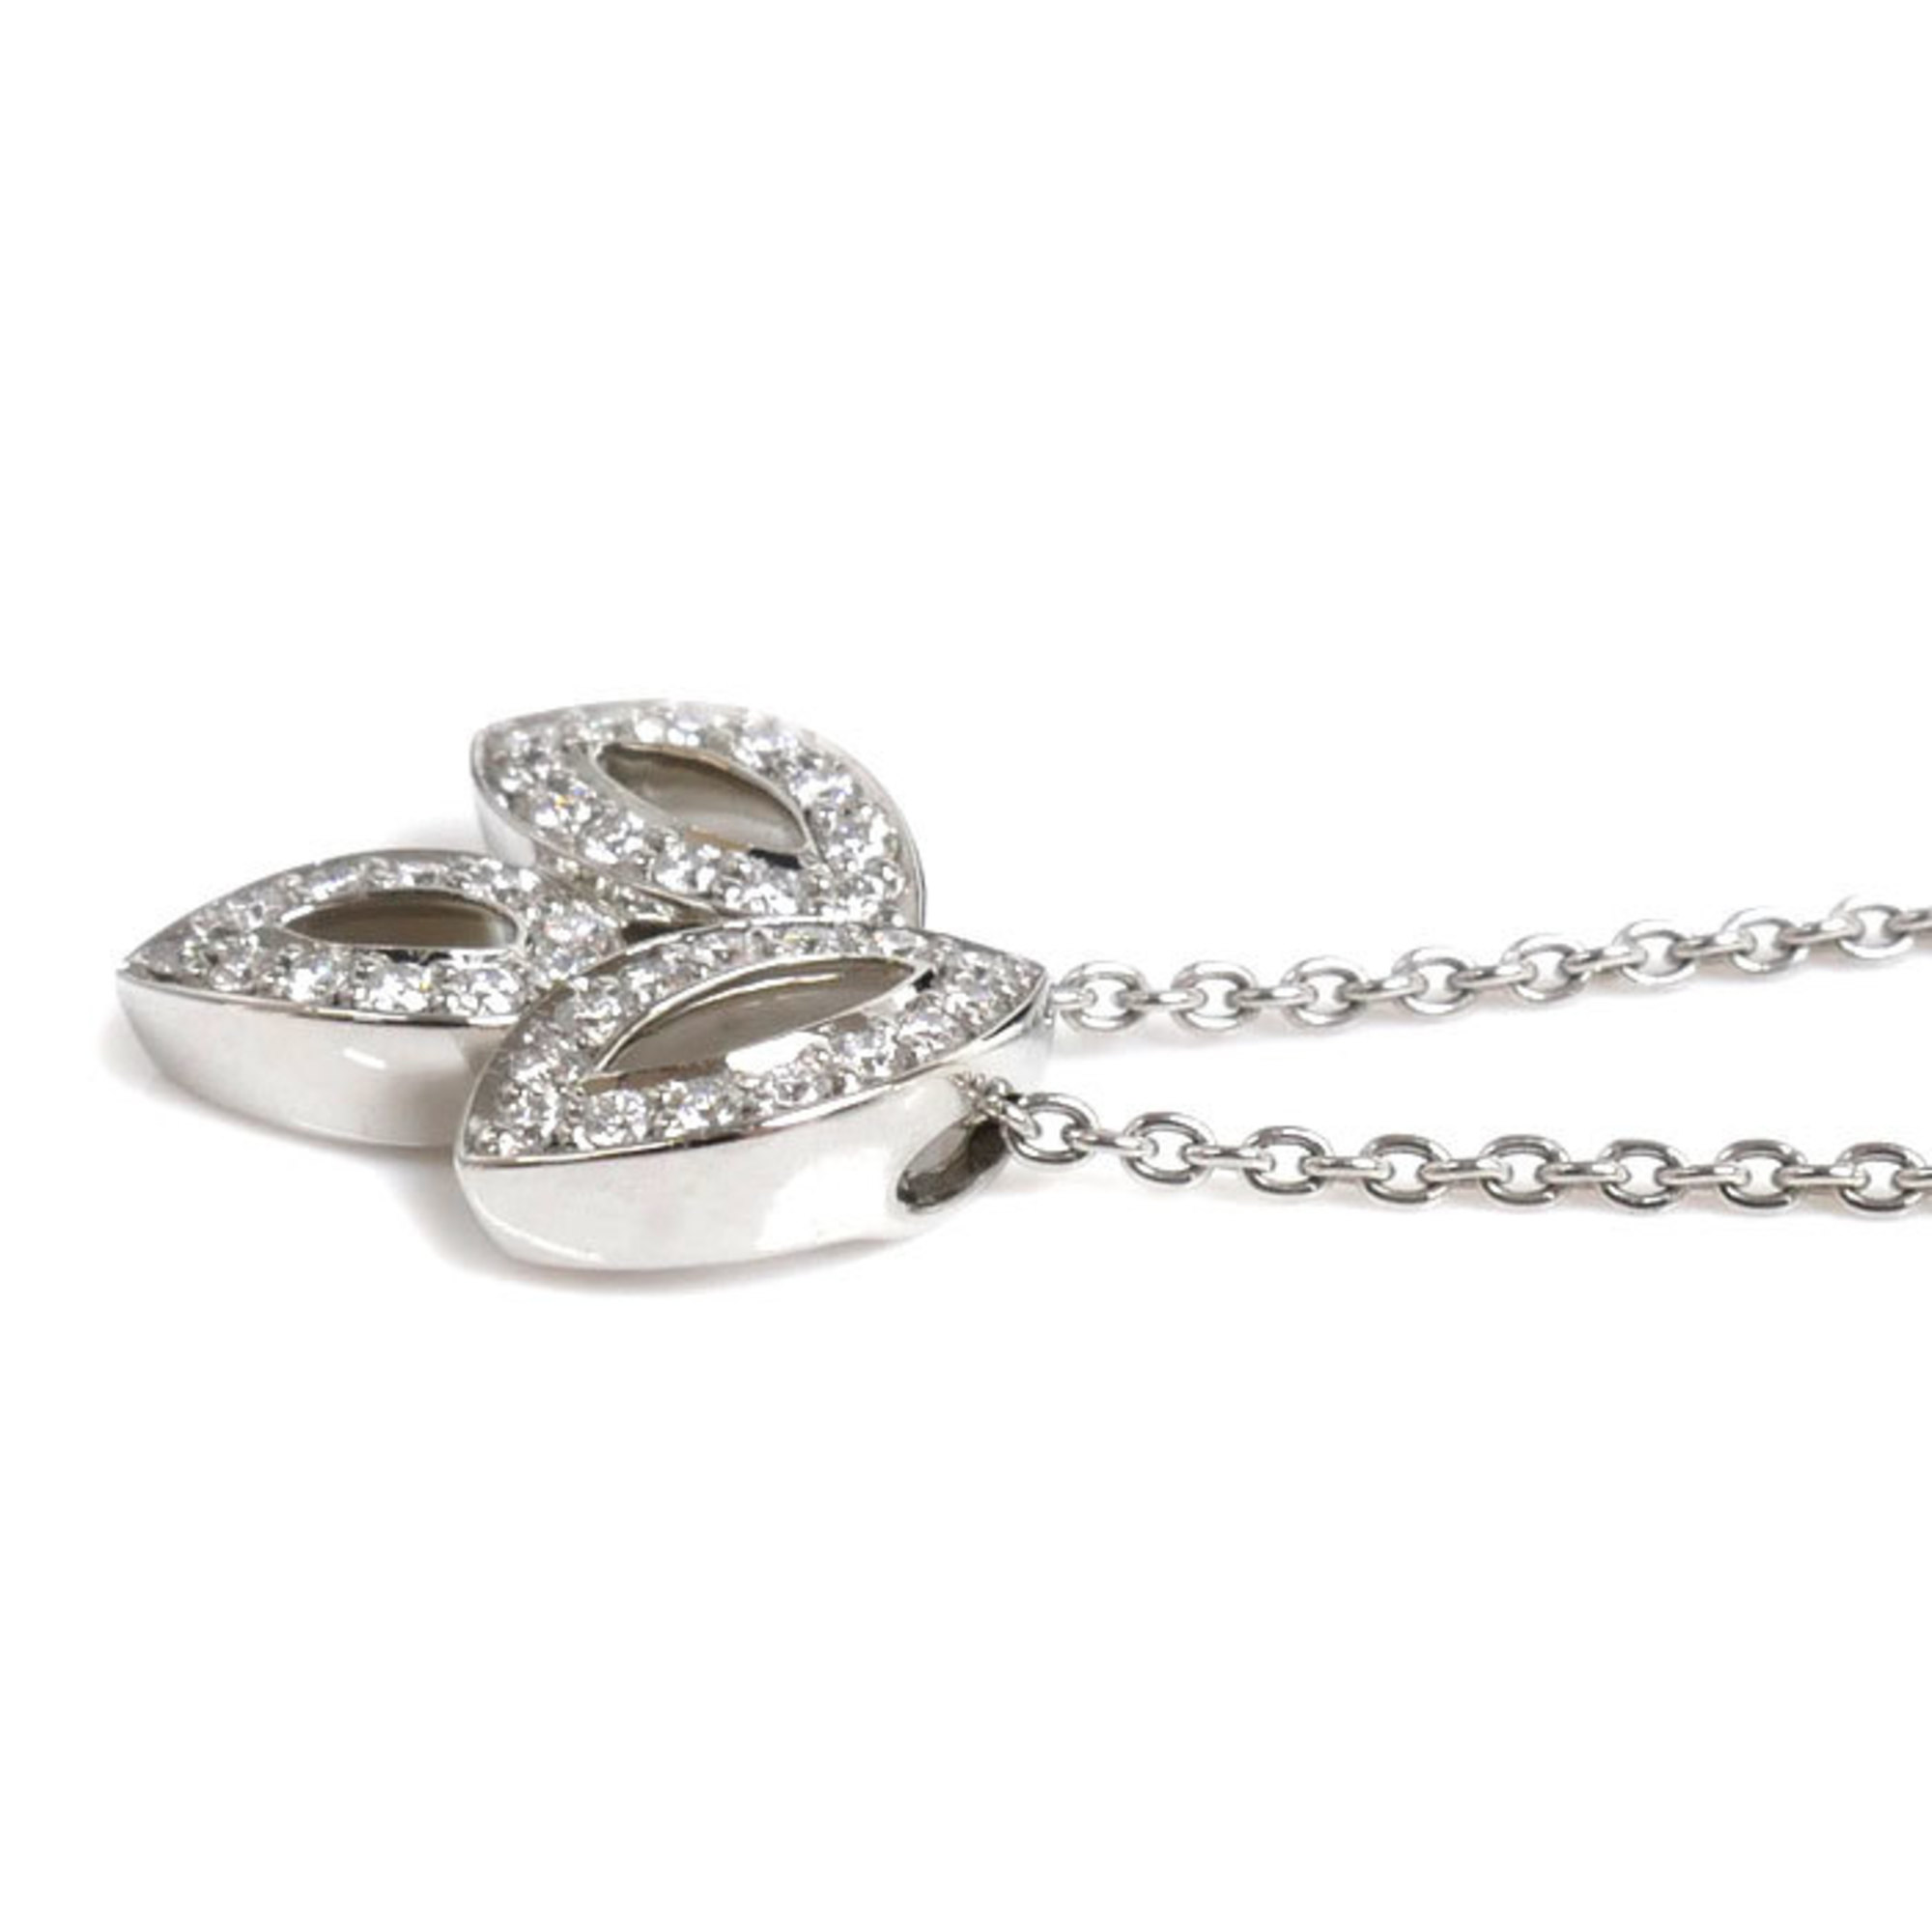 HARRY WINSTON Harry Winston Pt950 Platinum Lily Cluster Diamond Necklace PEDPSMIMLC 5.6g 40cm Women's